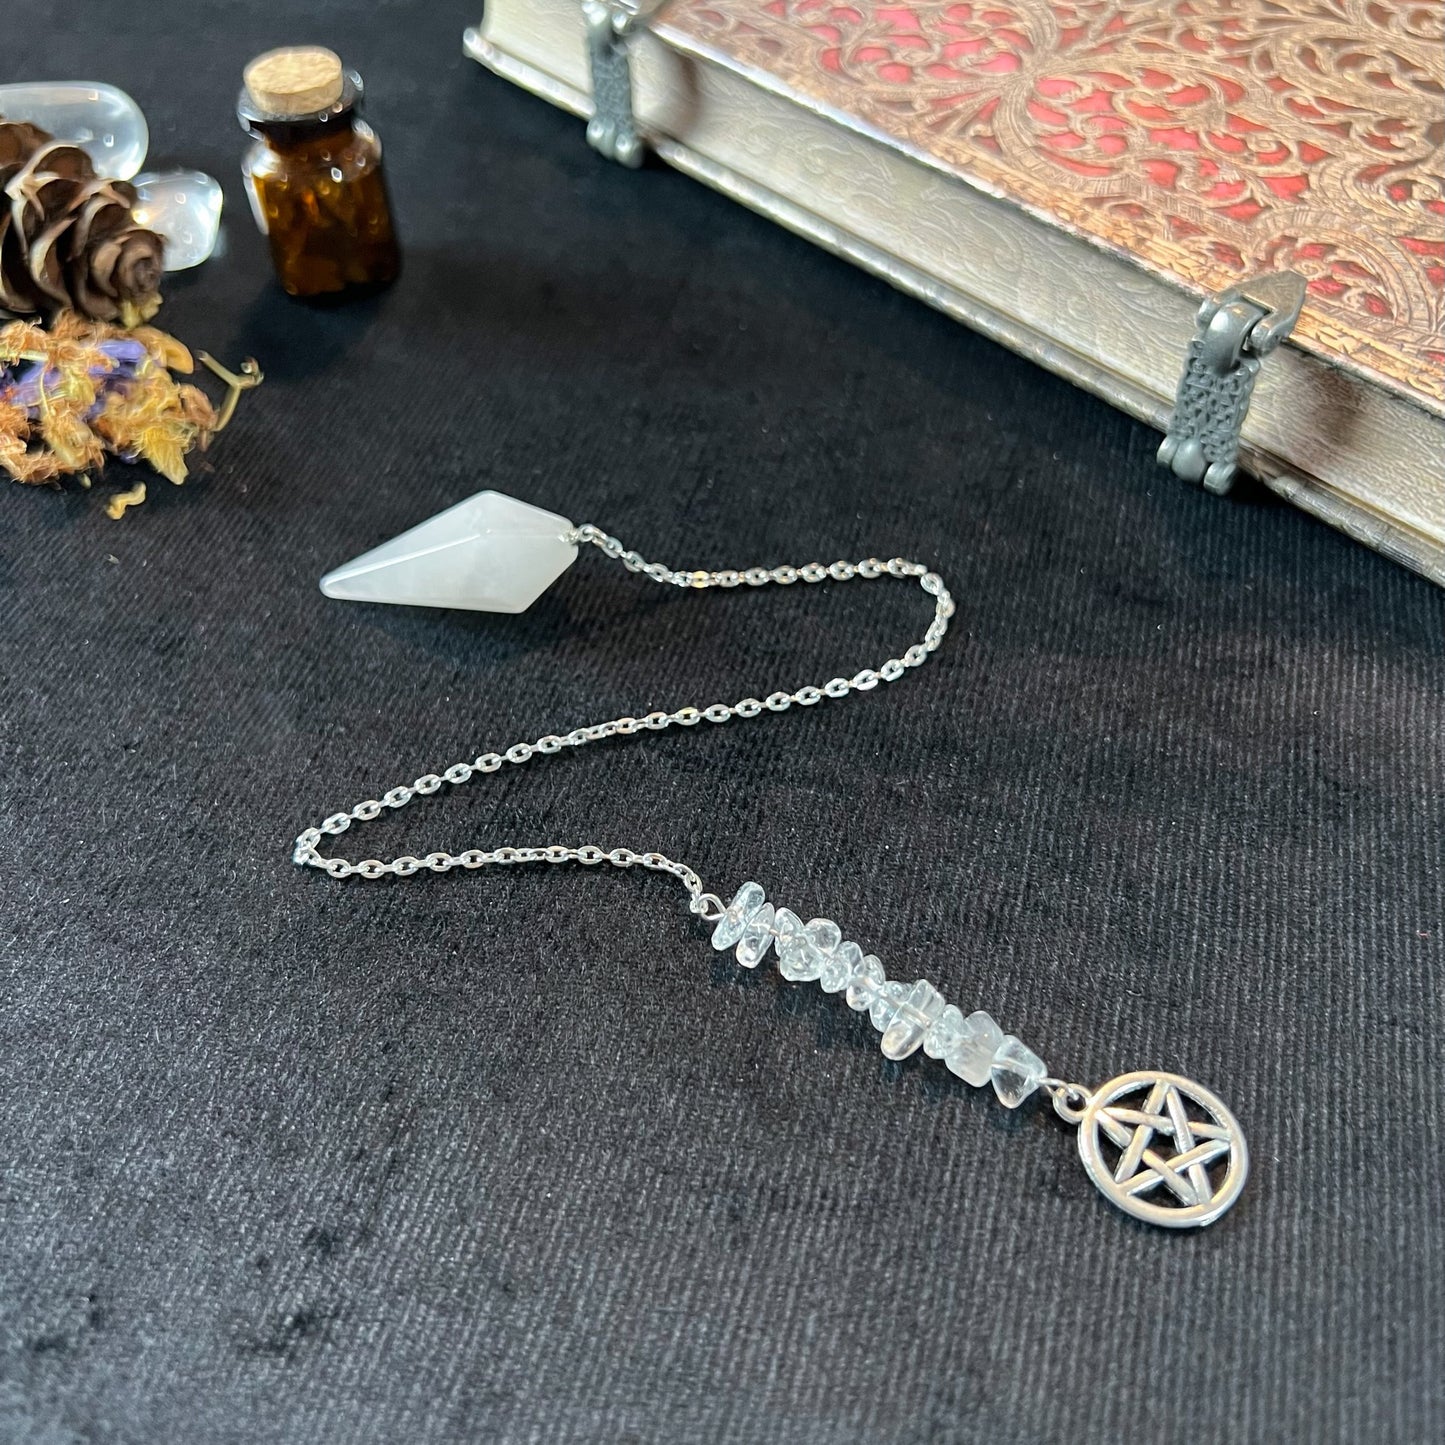 Clear quartz and pagan wiccan pentacle pendulum Baguette Magick